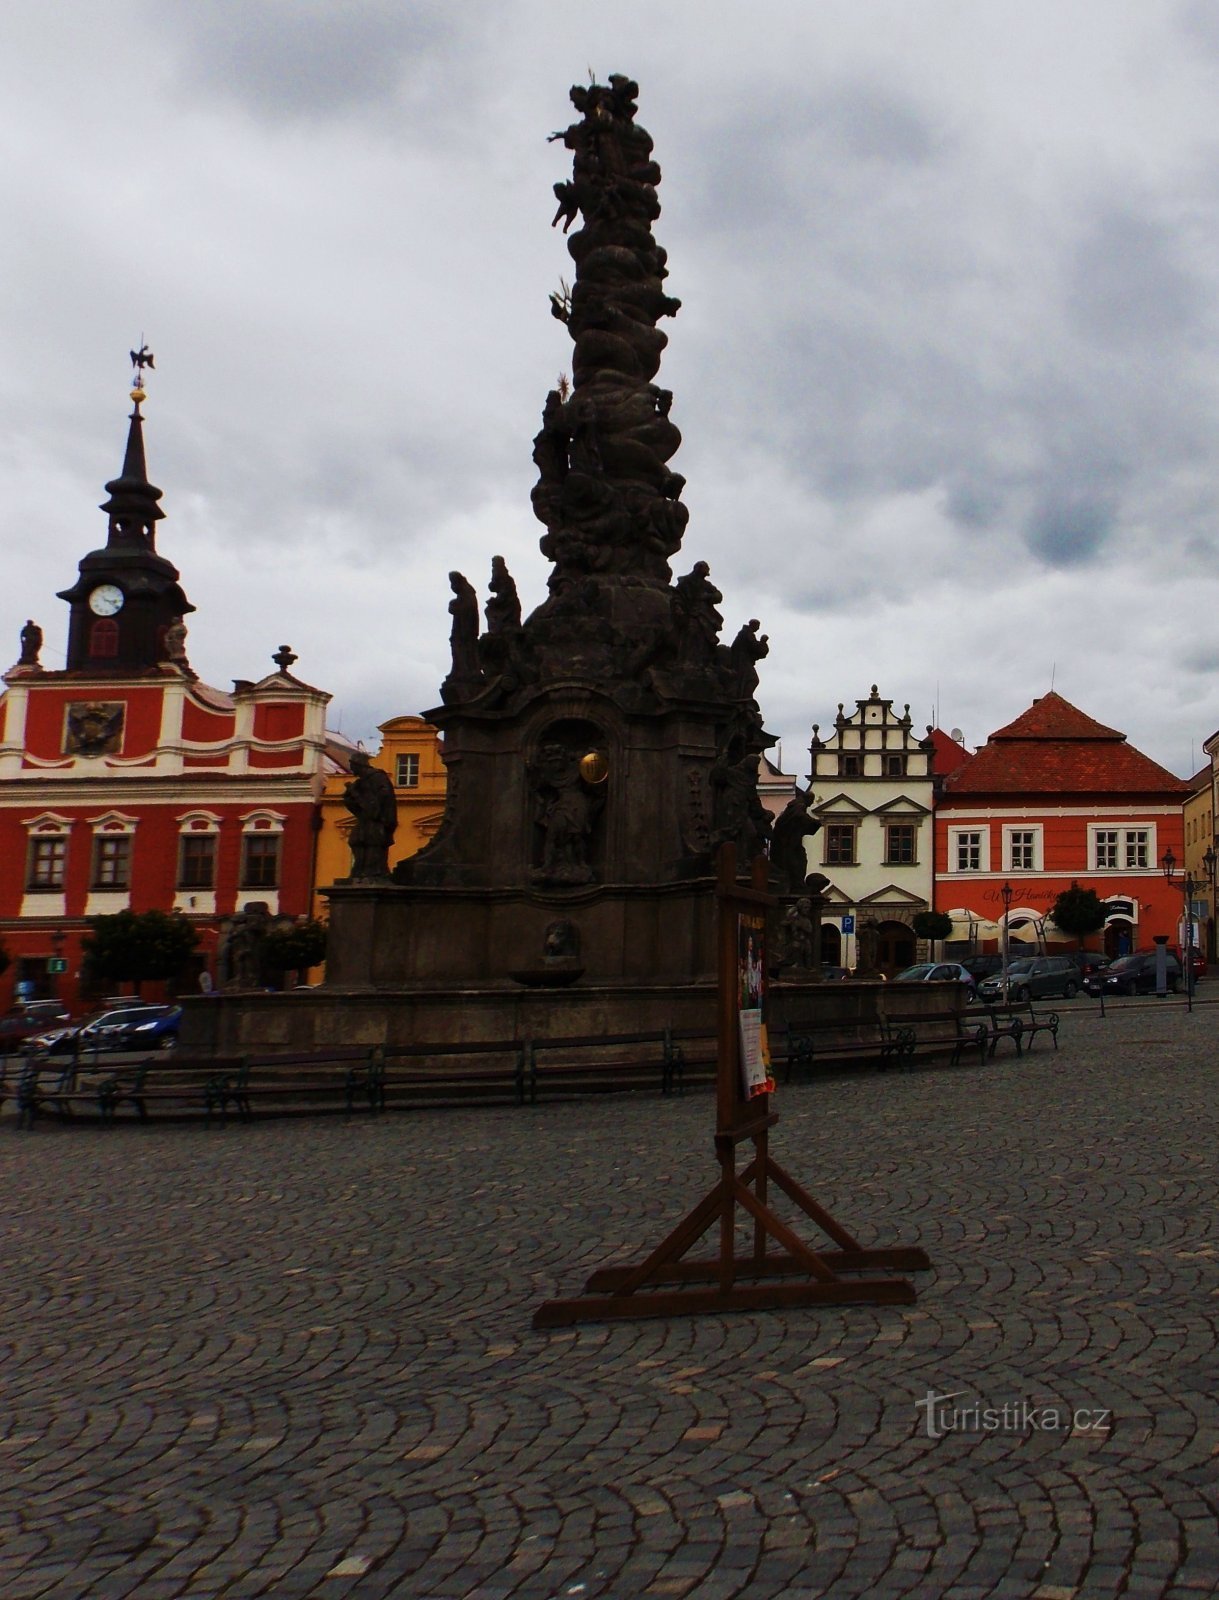 Plague column on Ressel Square in Chrudim